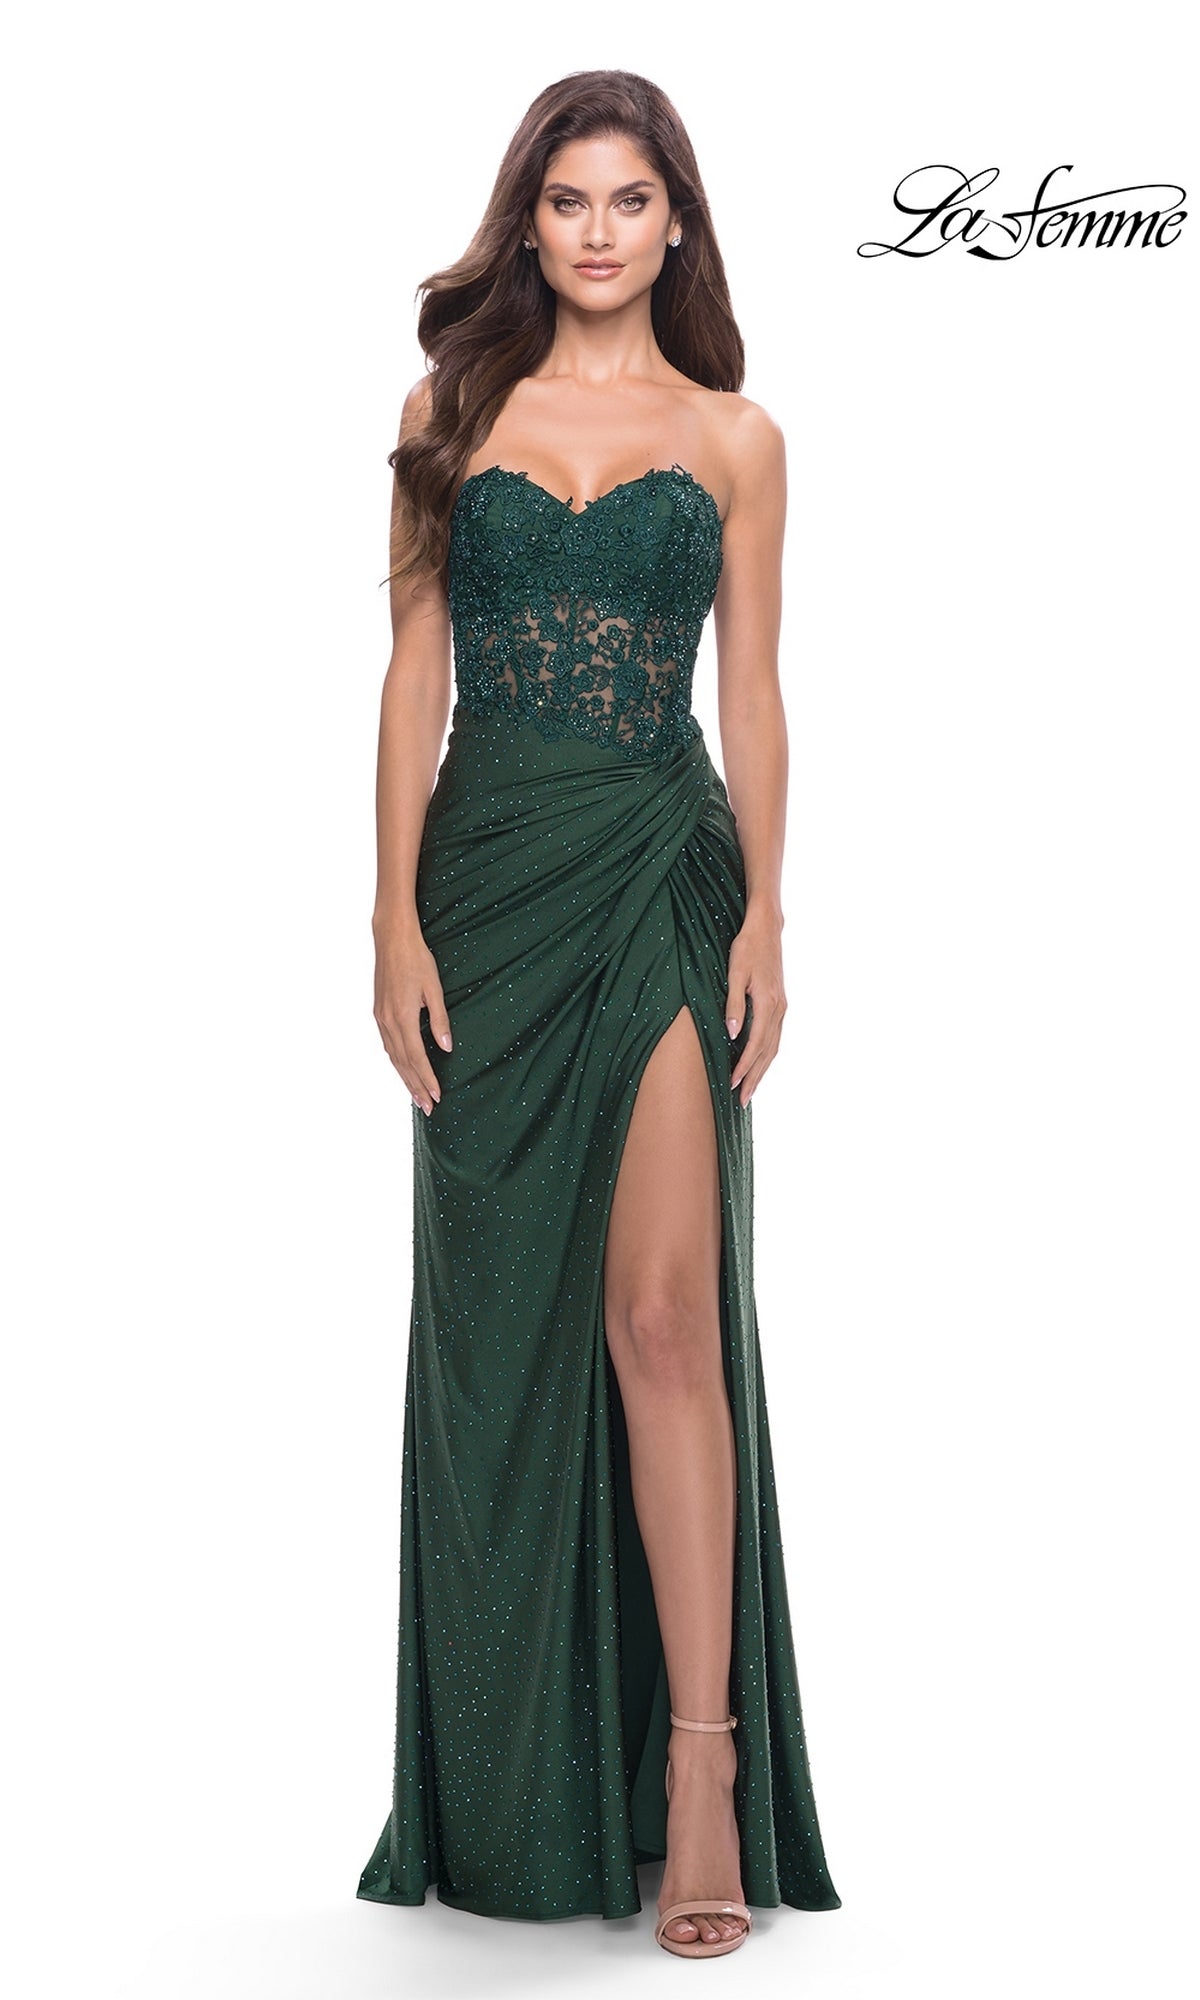  La Femme 31343 Formal Prom Dress